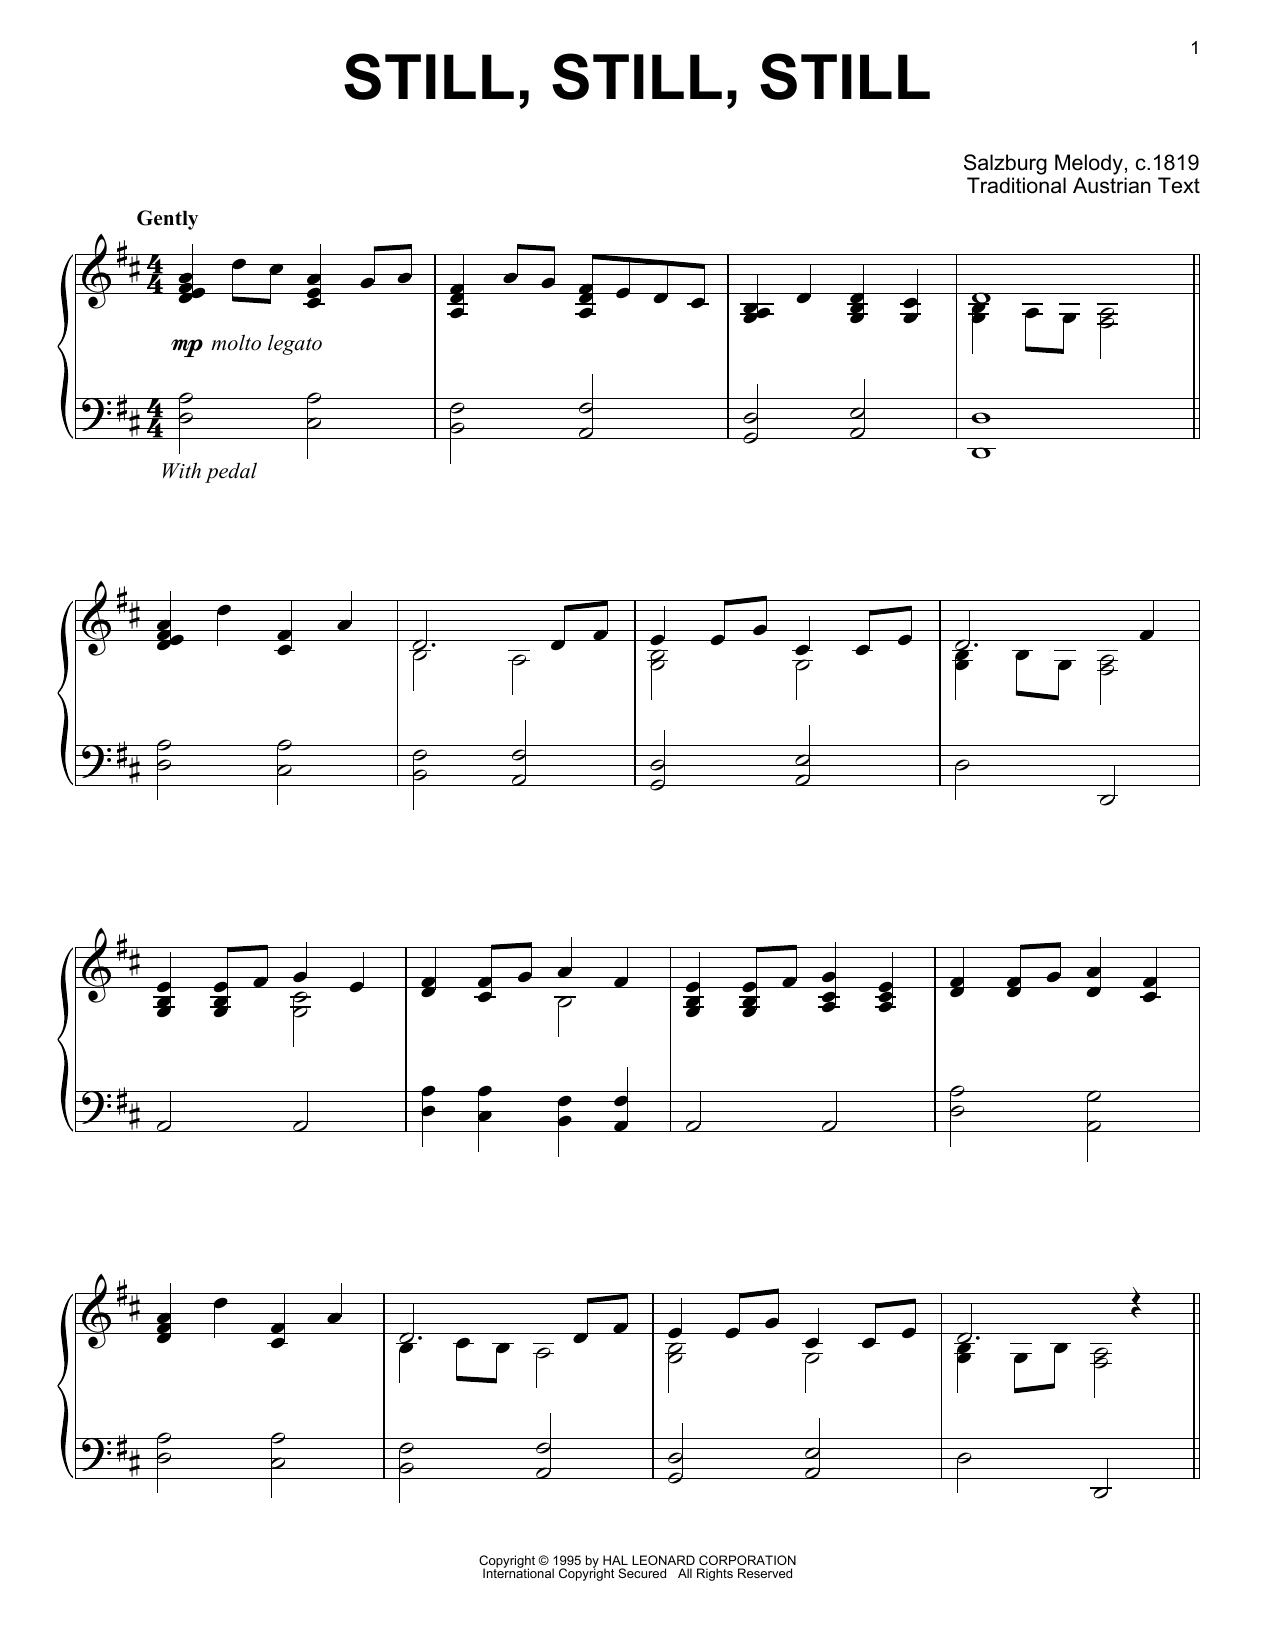 Traditional Austrian Text Still, Still, Still Sheet Music Notes & Chords for Alto Saxophone - Download or Print PDF